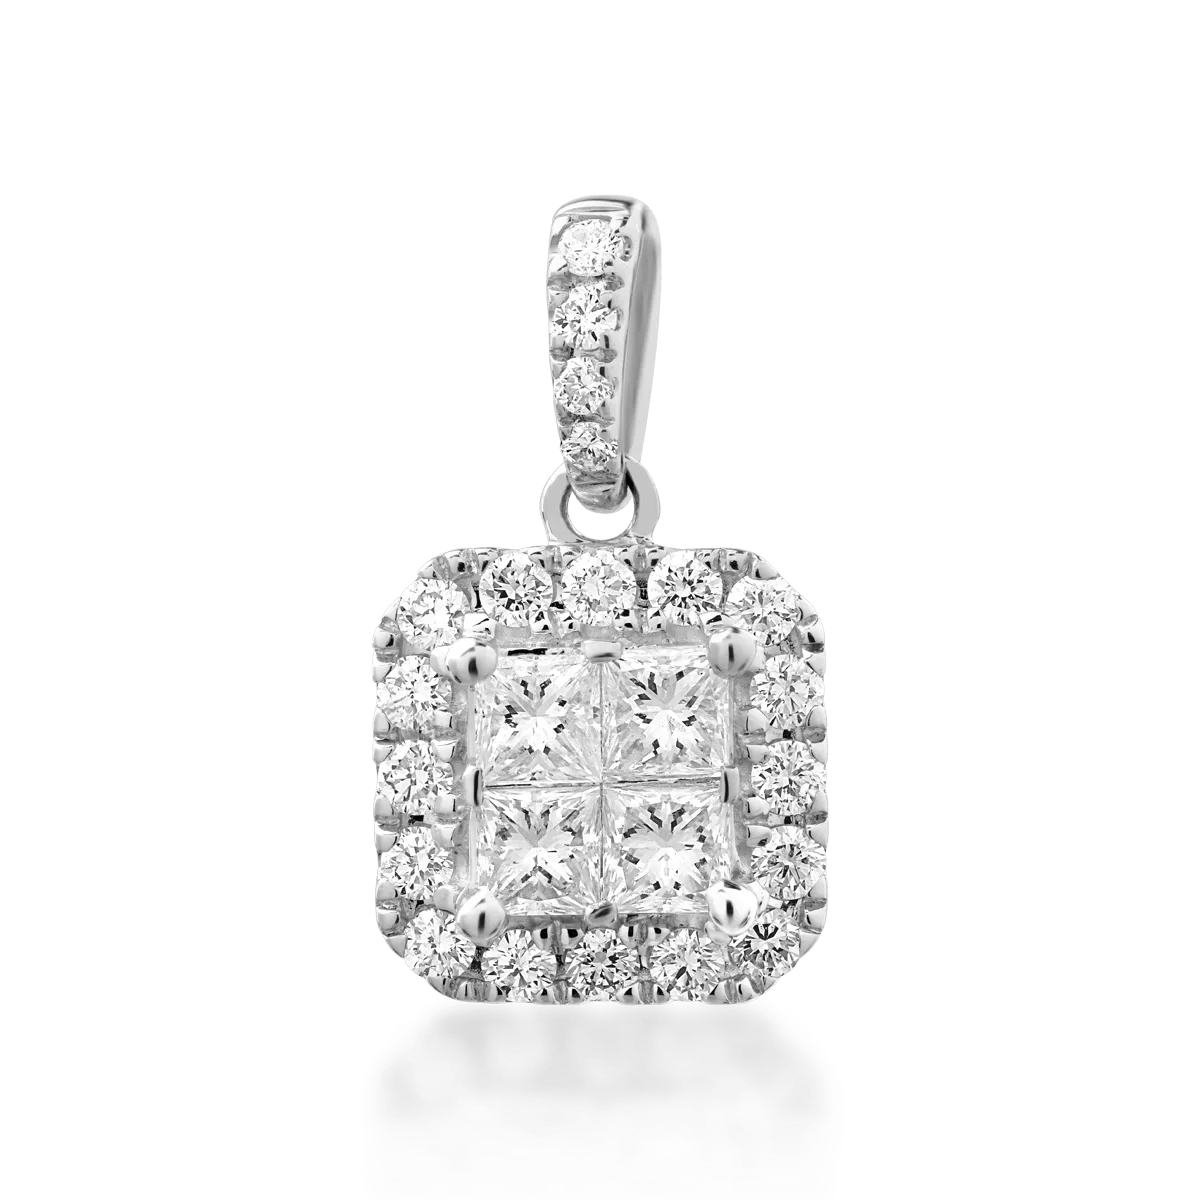 18K white gold pendant with 0.4ct diamonds